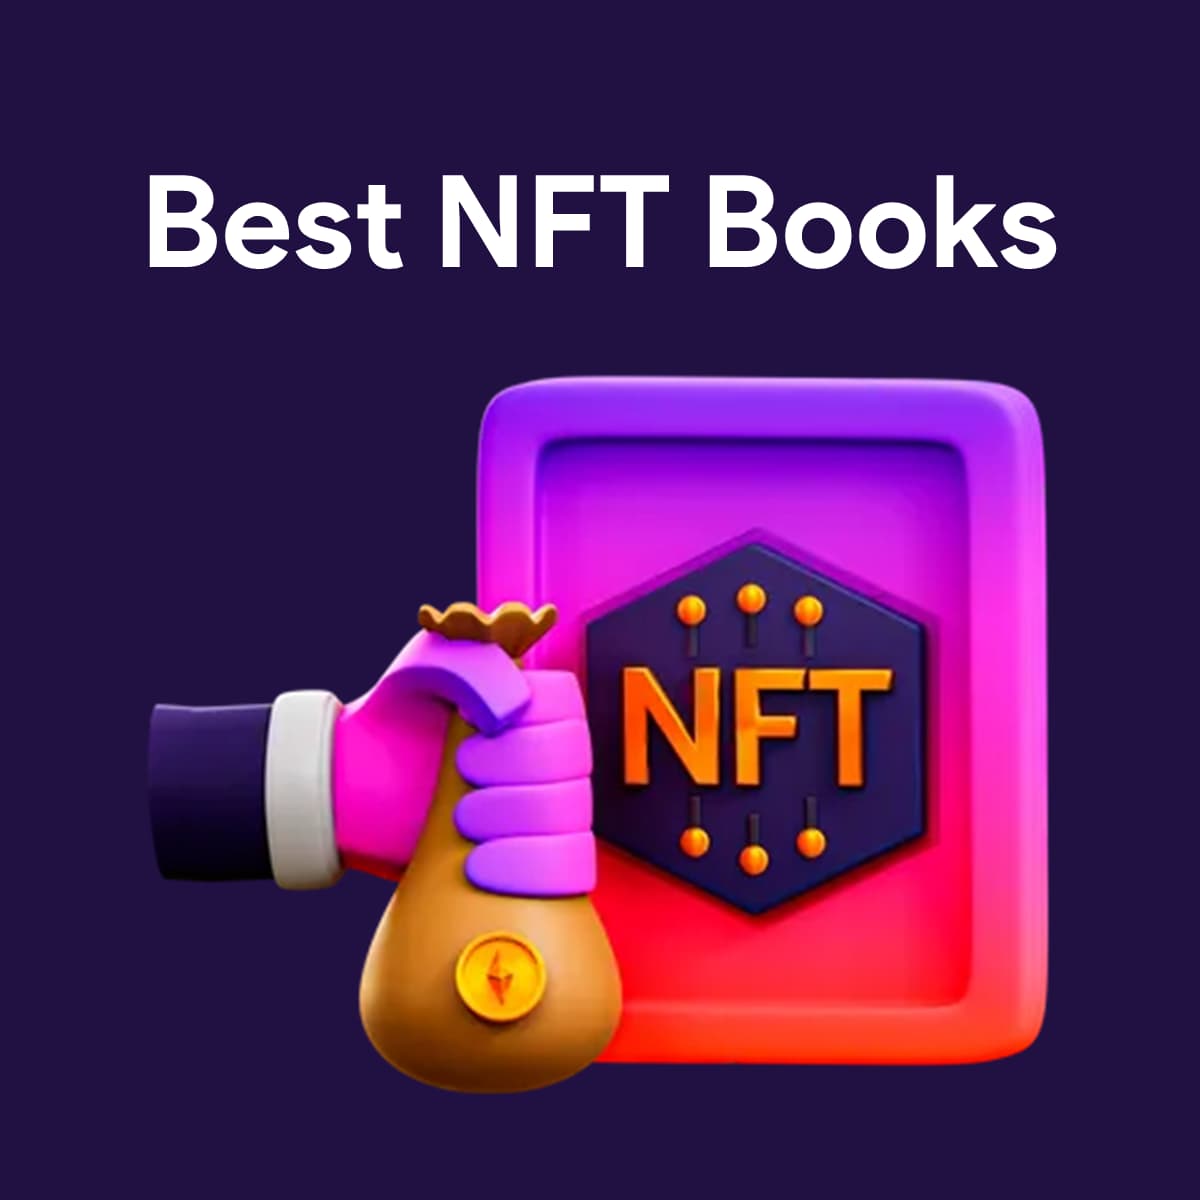 Best NFT Books